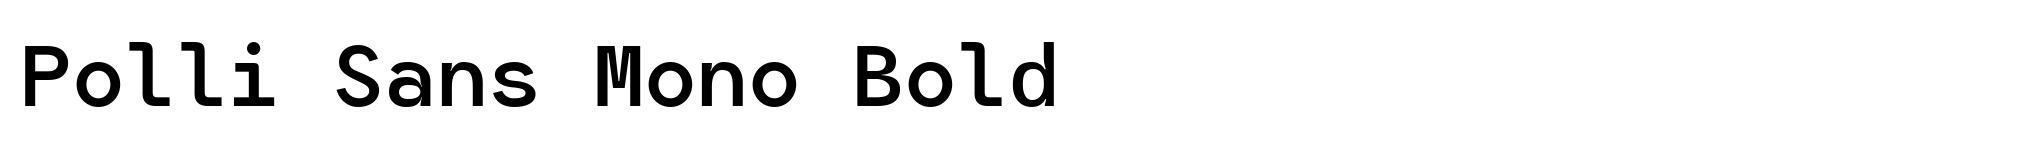 Polli Sans Mono Bold image